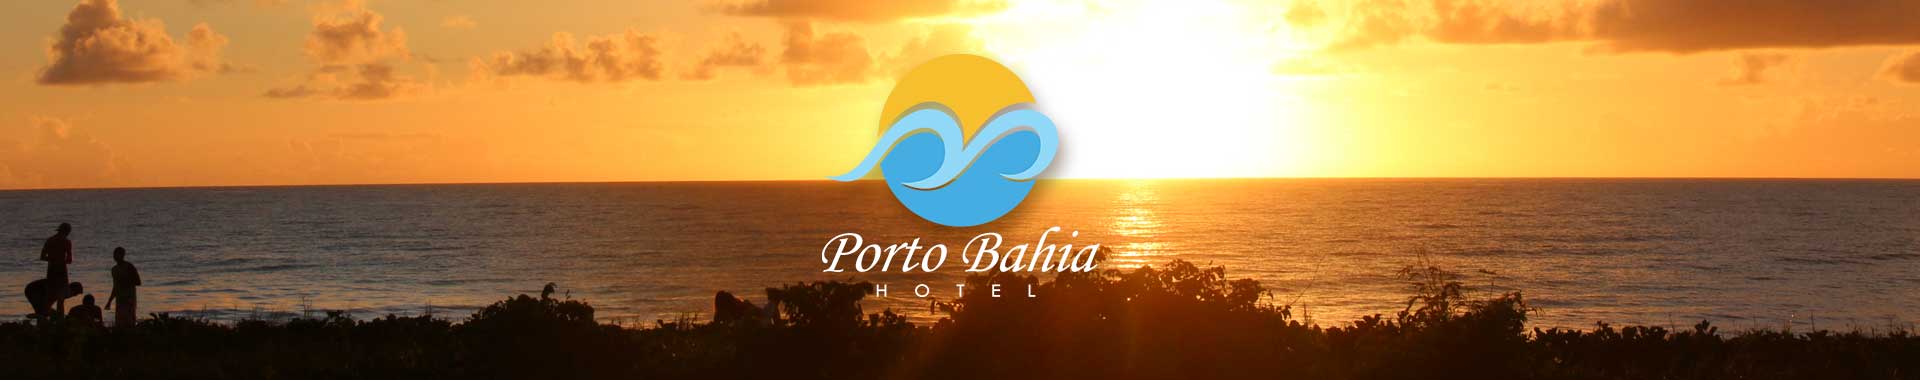 por-do-sol-porto-bahia-hotel